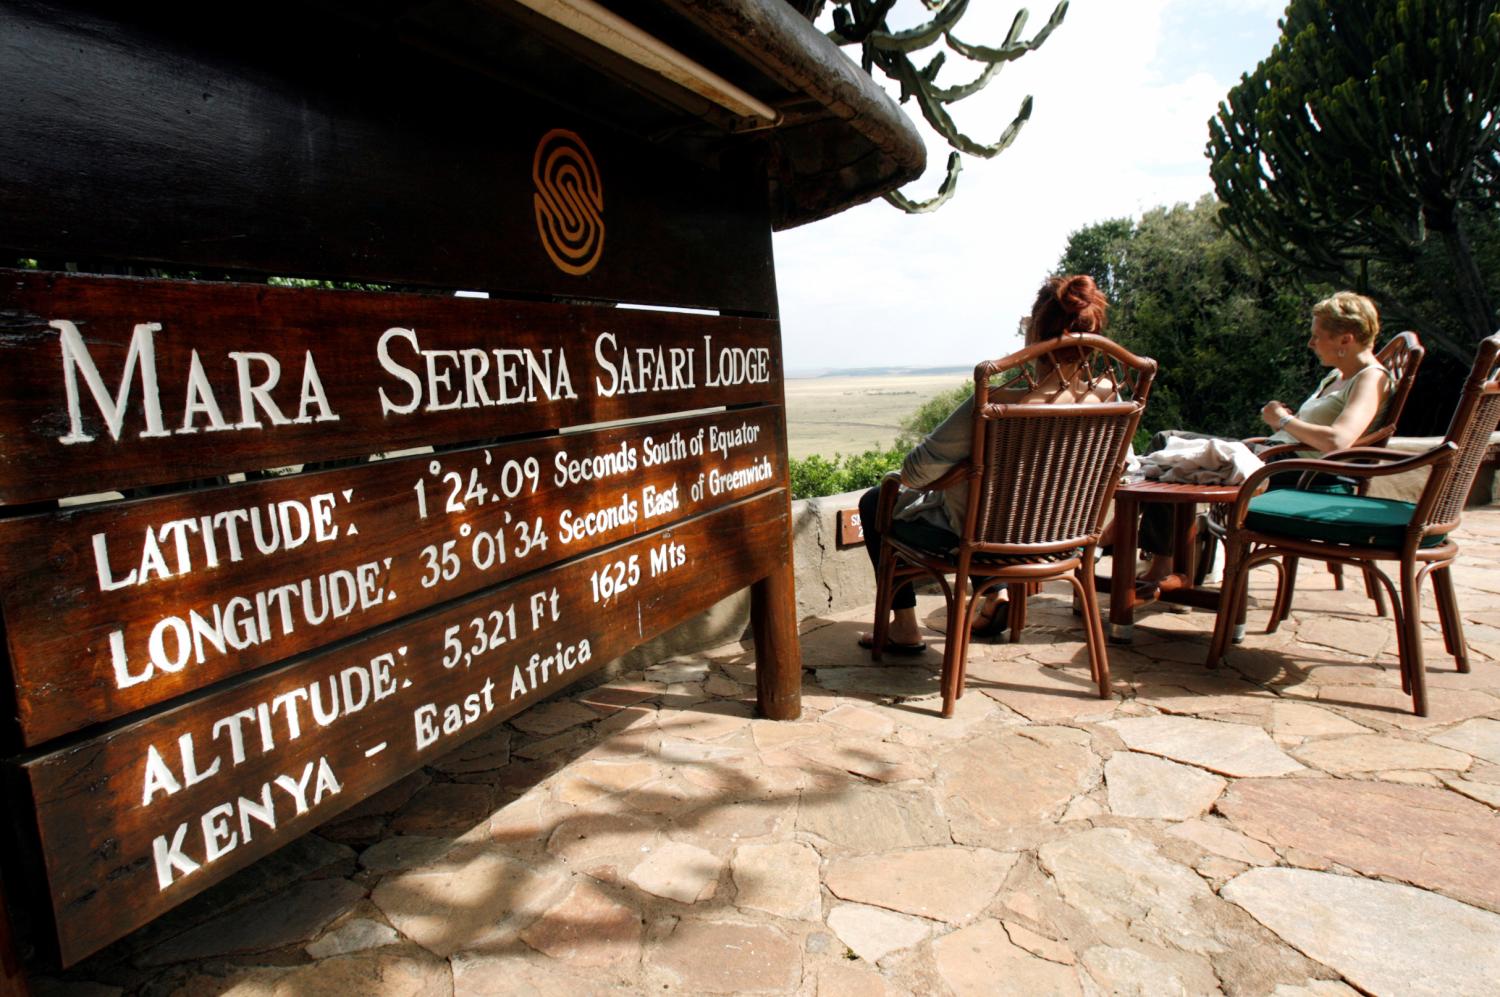 Tourists sit at the Mara Serena Safari Lodge, within the Masai Mara game reserve, southwest of Nairobi, Kenya, July 28, 2009. Picture taken July 28, 2009. REUTERS/Thomas Mukoya - RC1A8B82F4A0